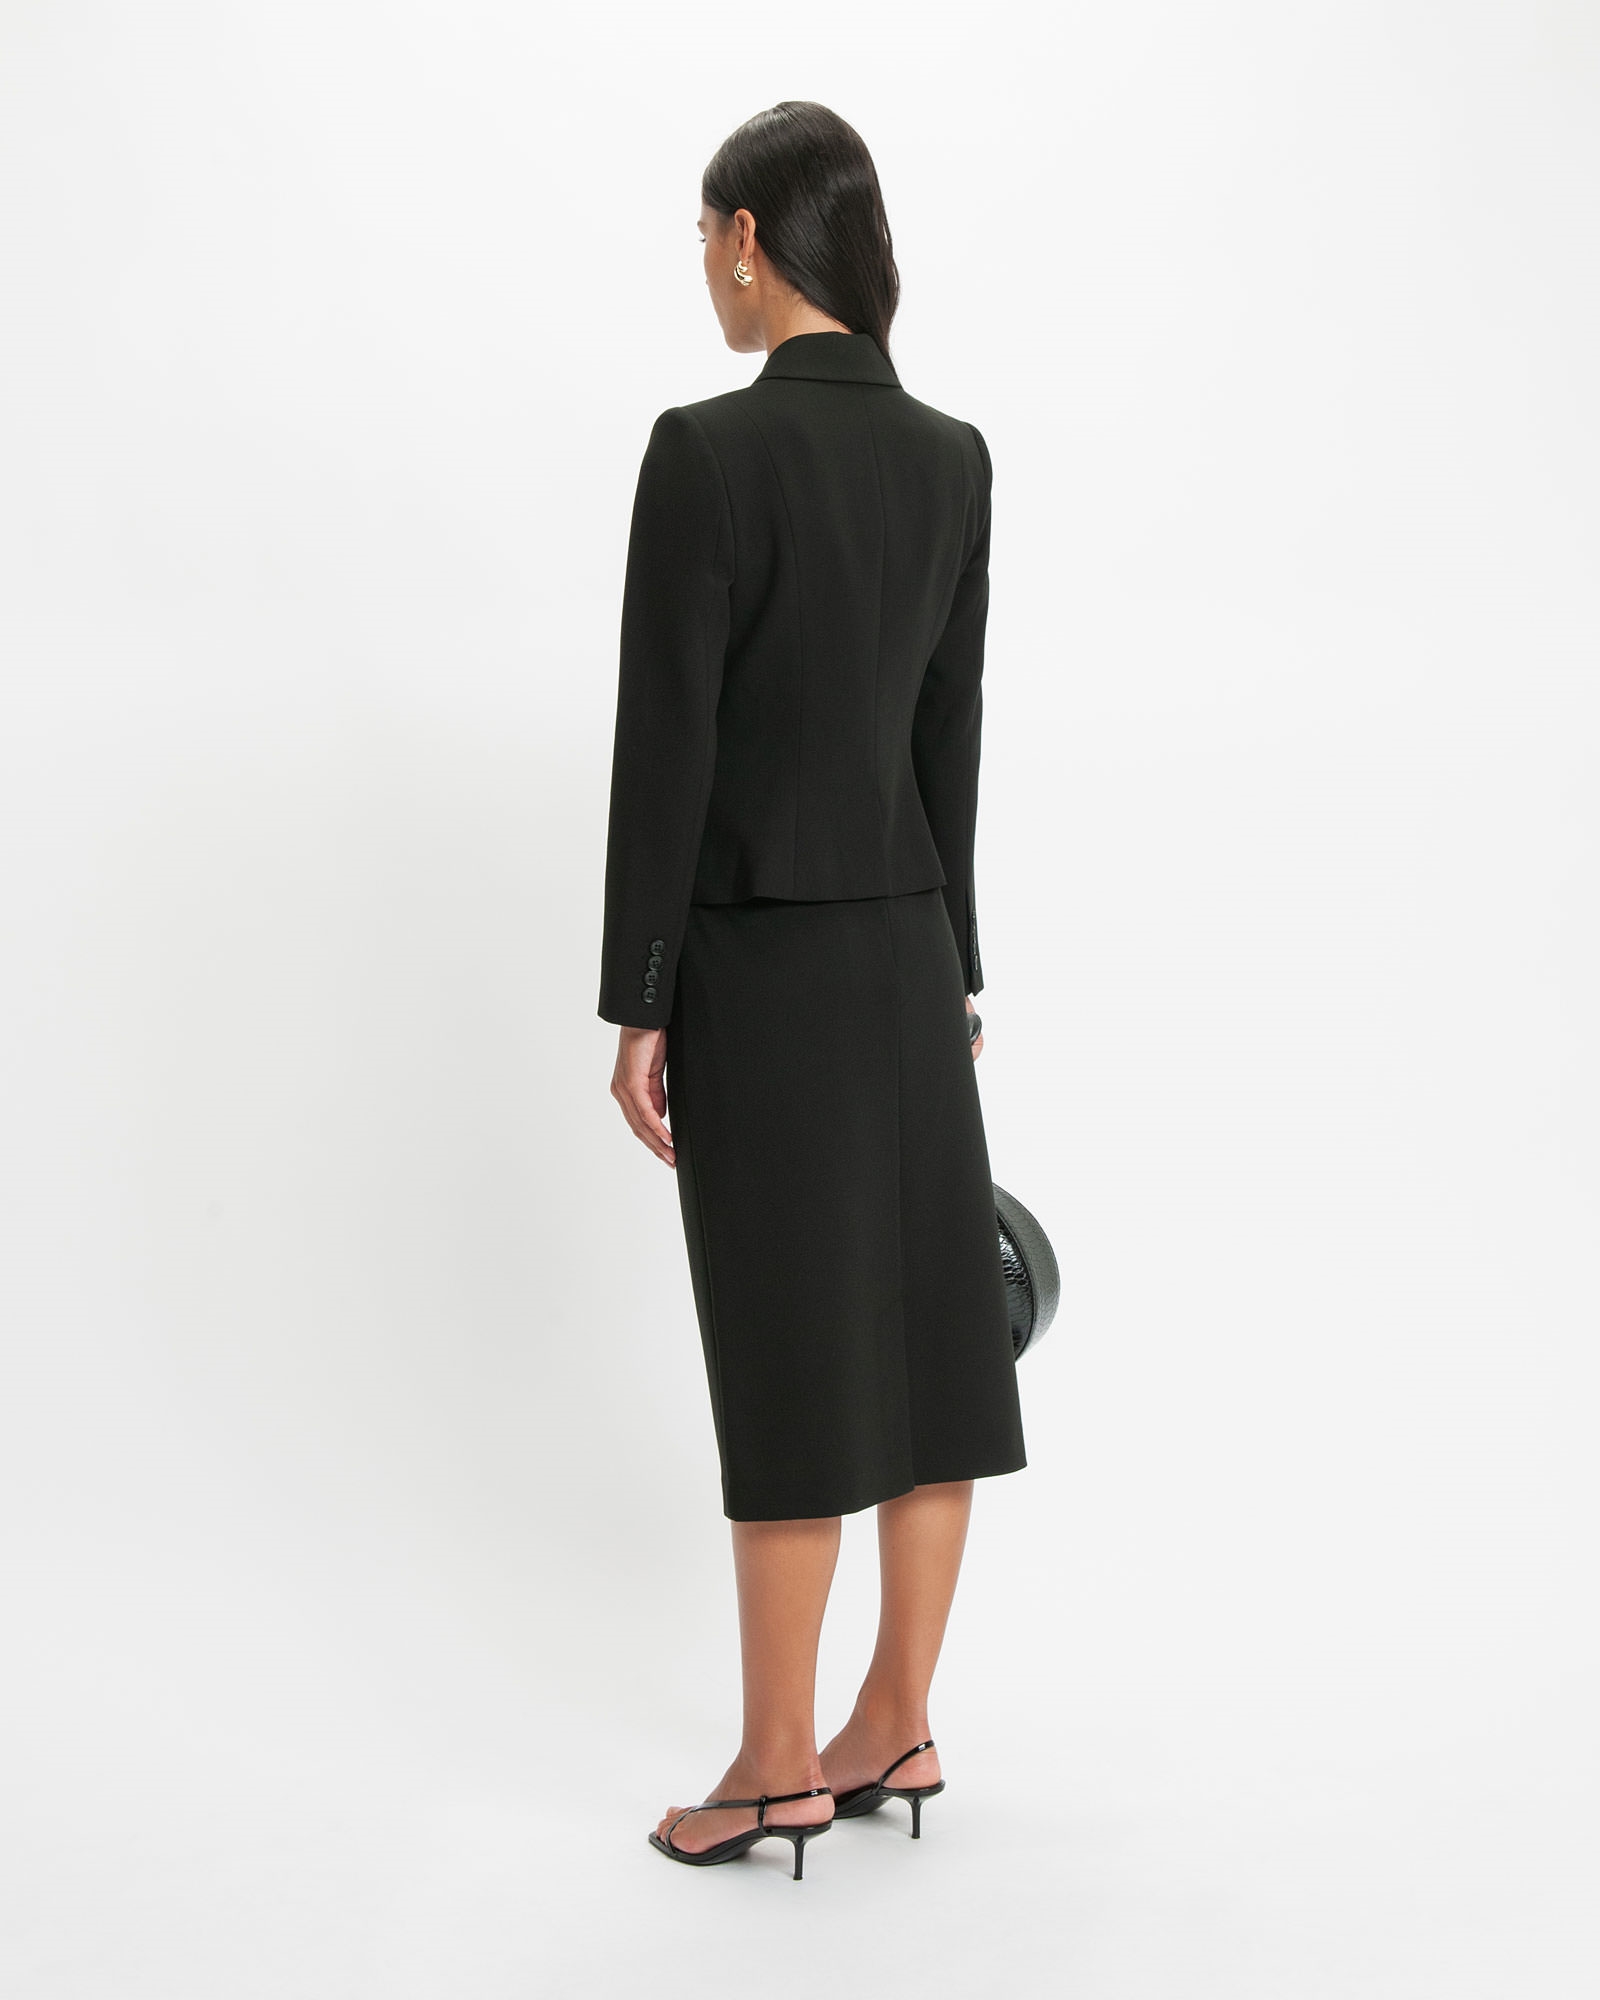 Skirts | Stretch Suit Pencil Skirt | 990 Black